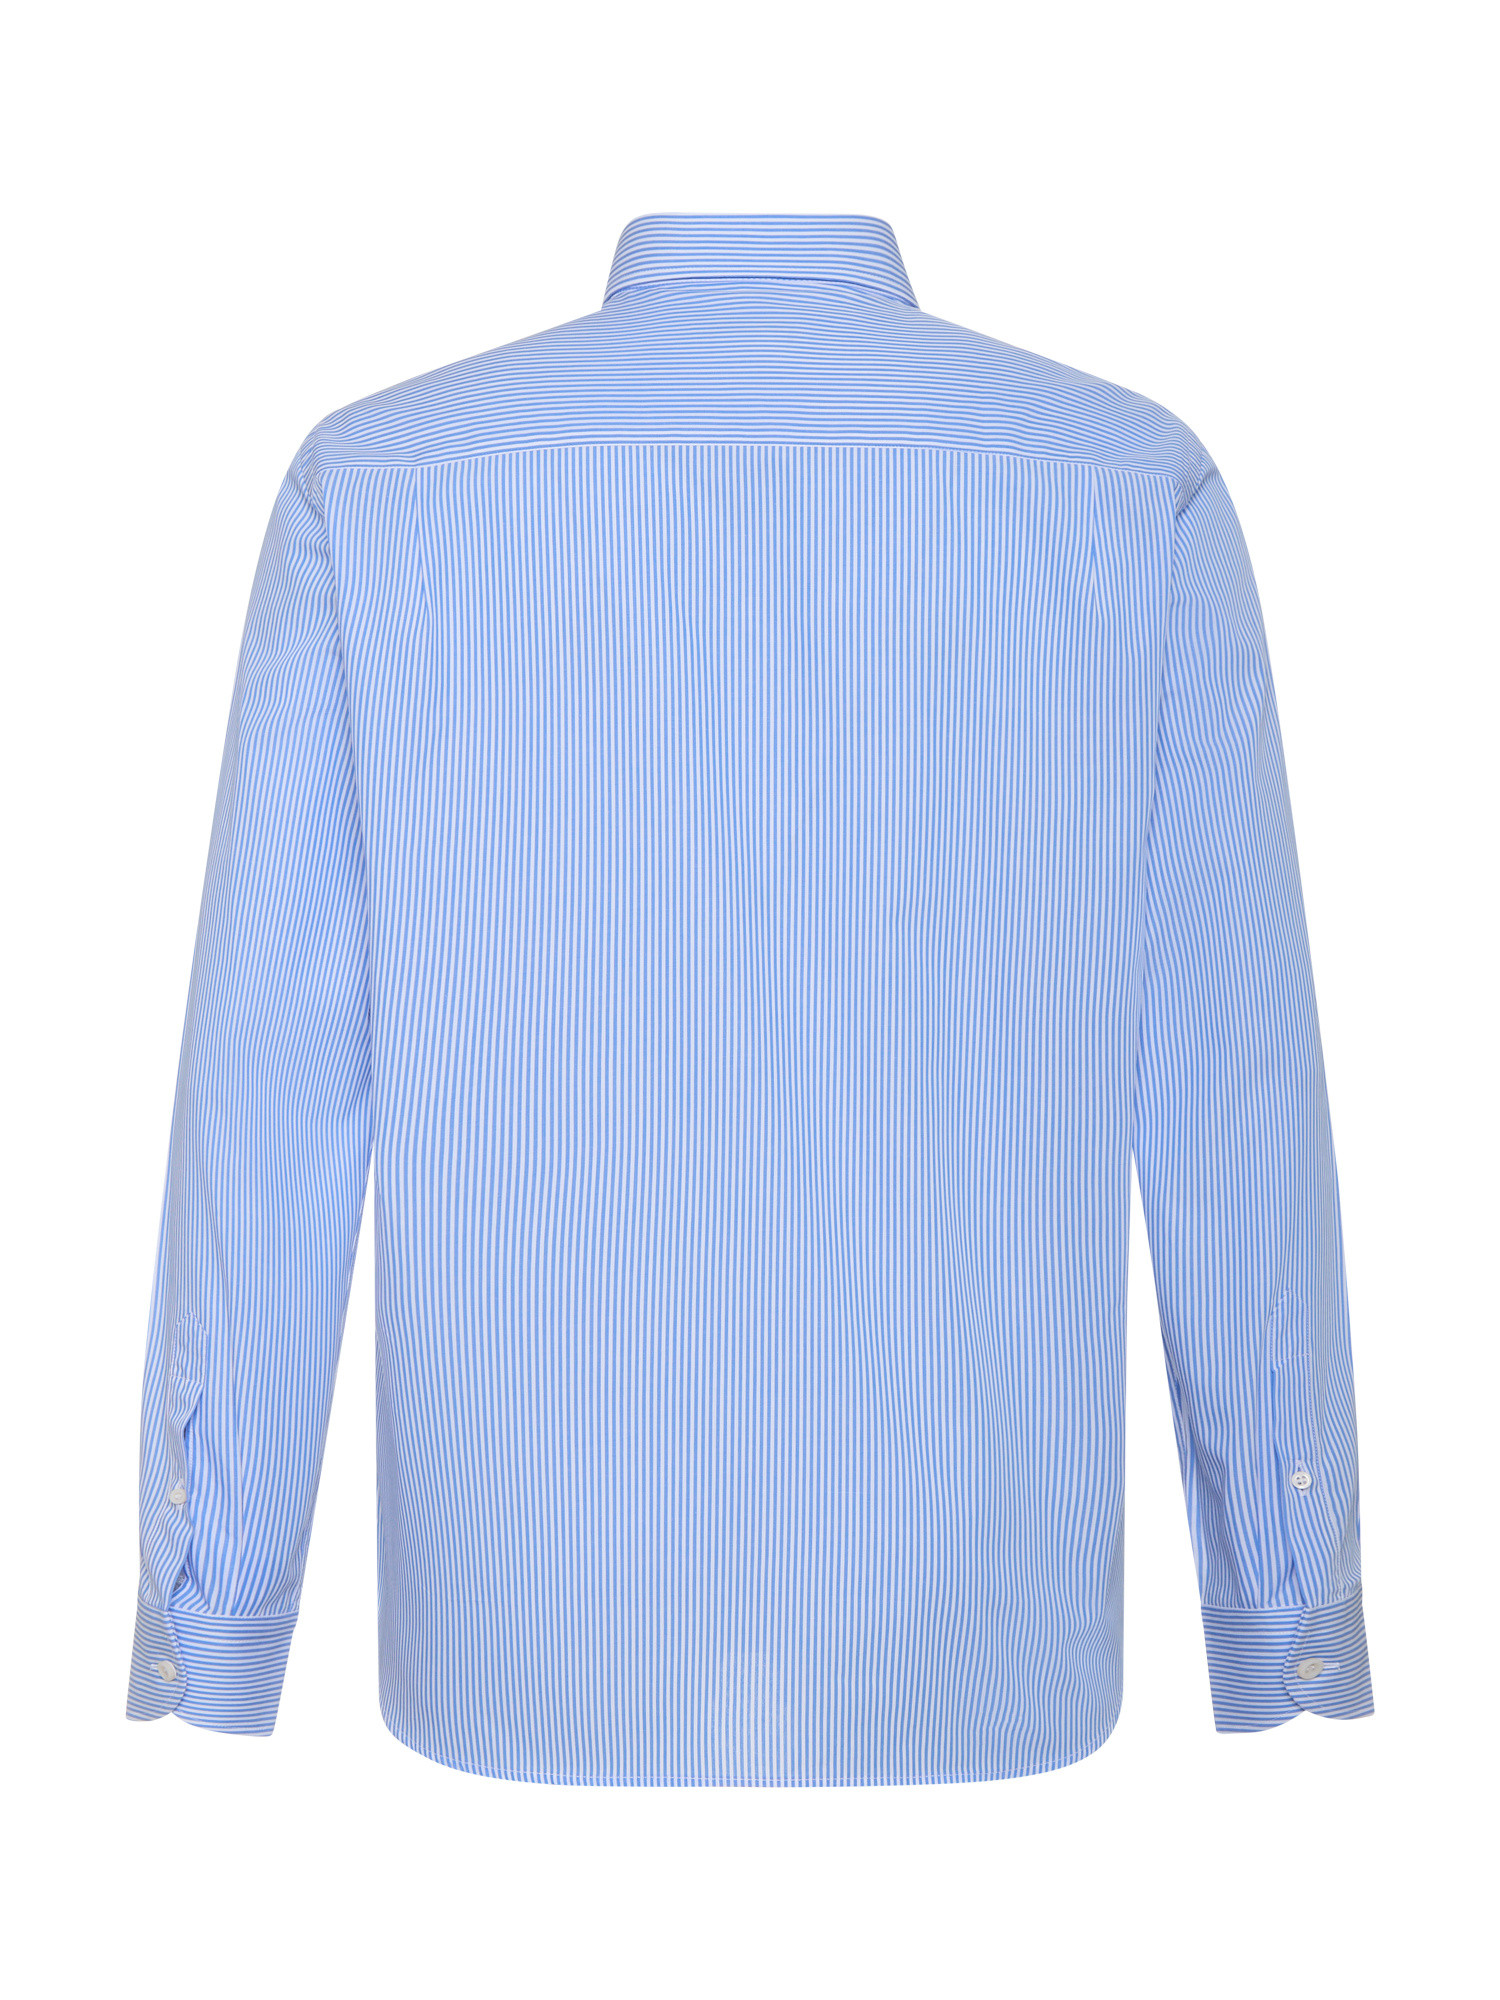 Luca D'Altieri - Regular fit casual shirt in pure cotton poplin, Light Blue, large image number 2